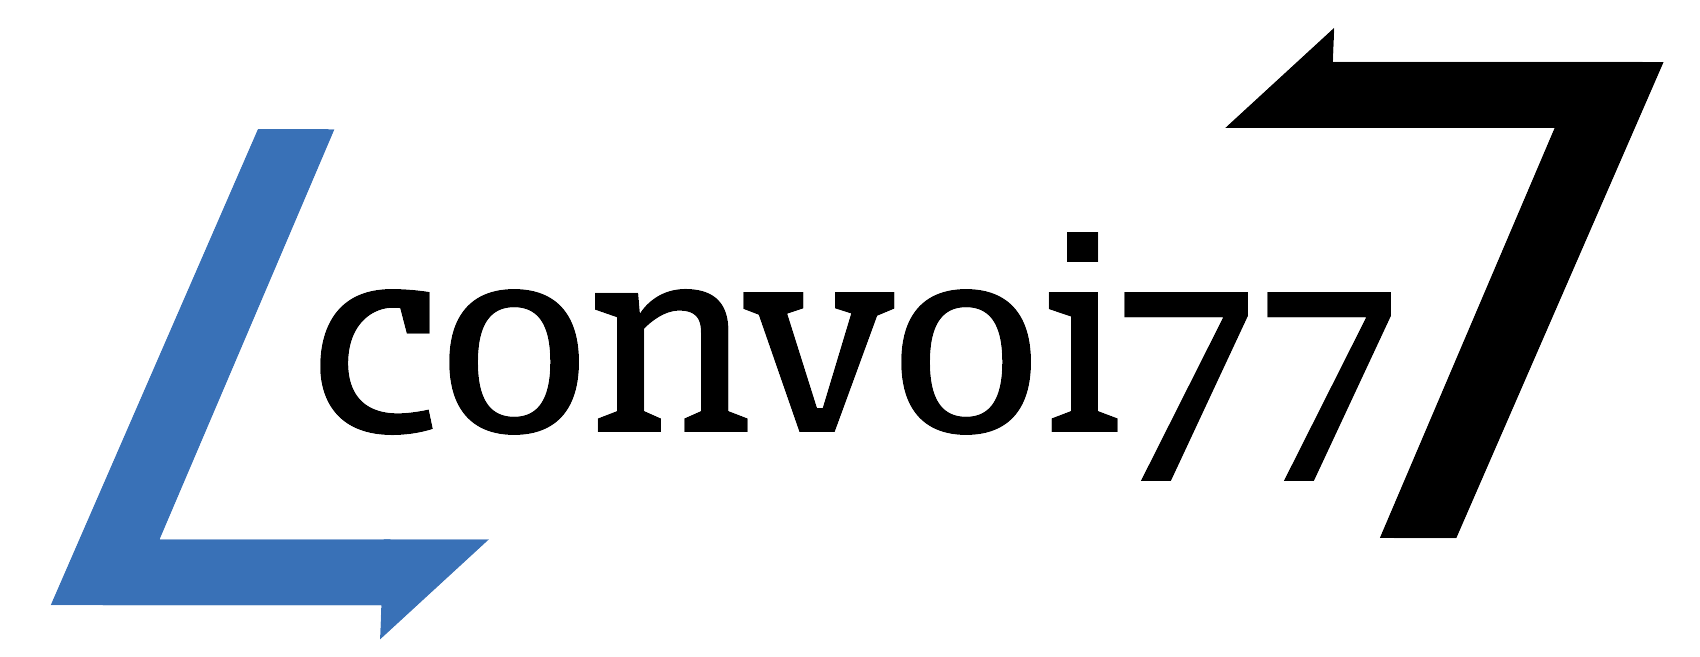 Logo de l'association Convoi 77